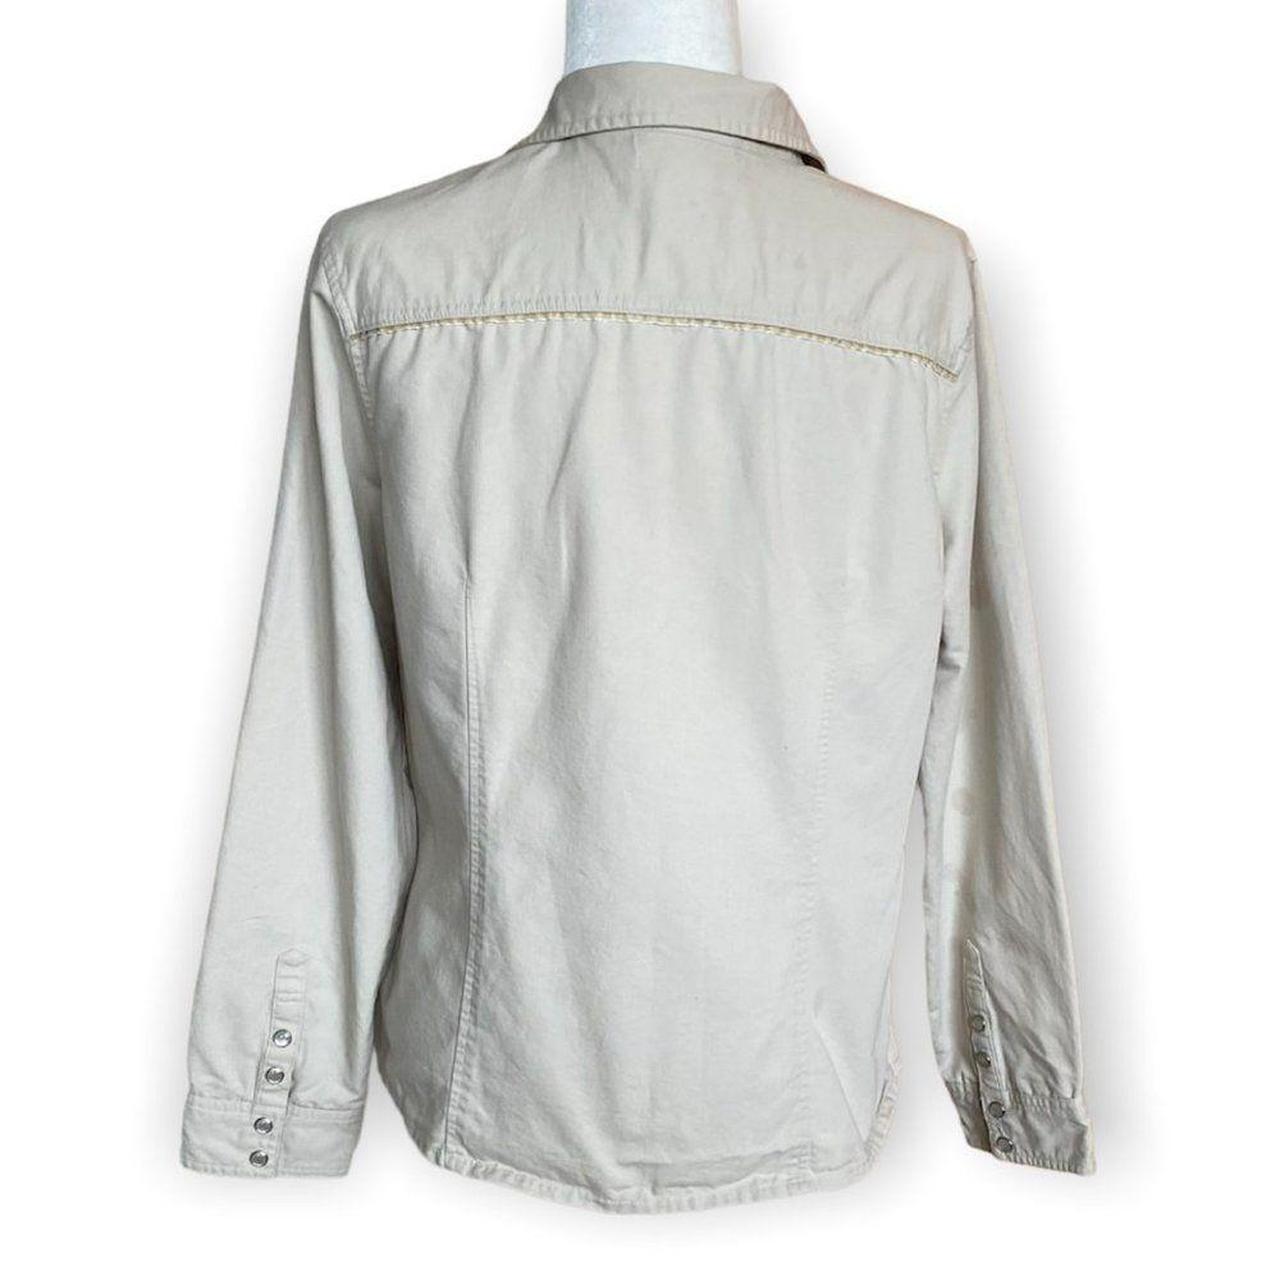 Route 66 Original Clothing Co Tan Snap Front Shirt... - Depop